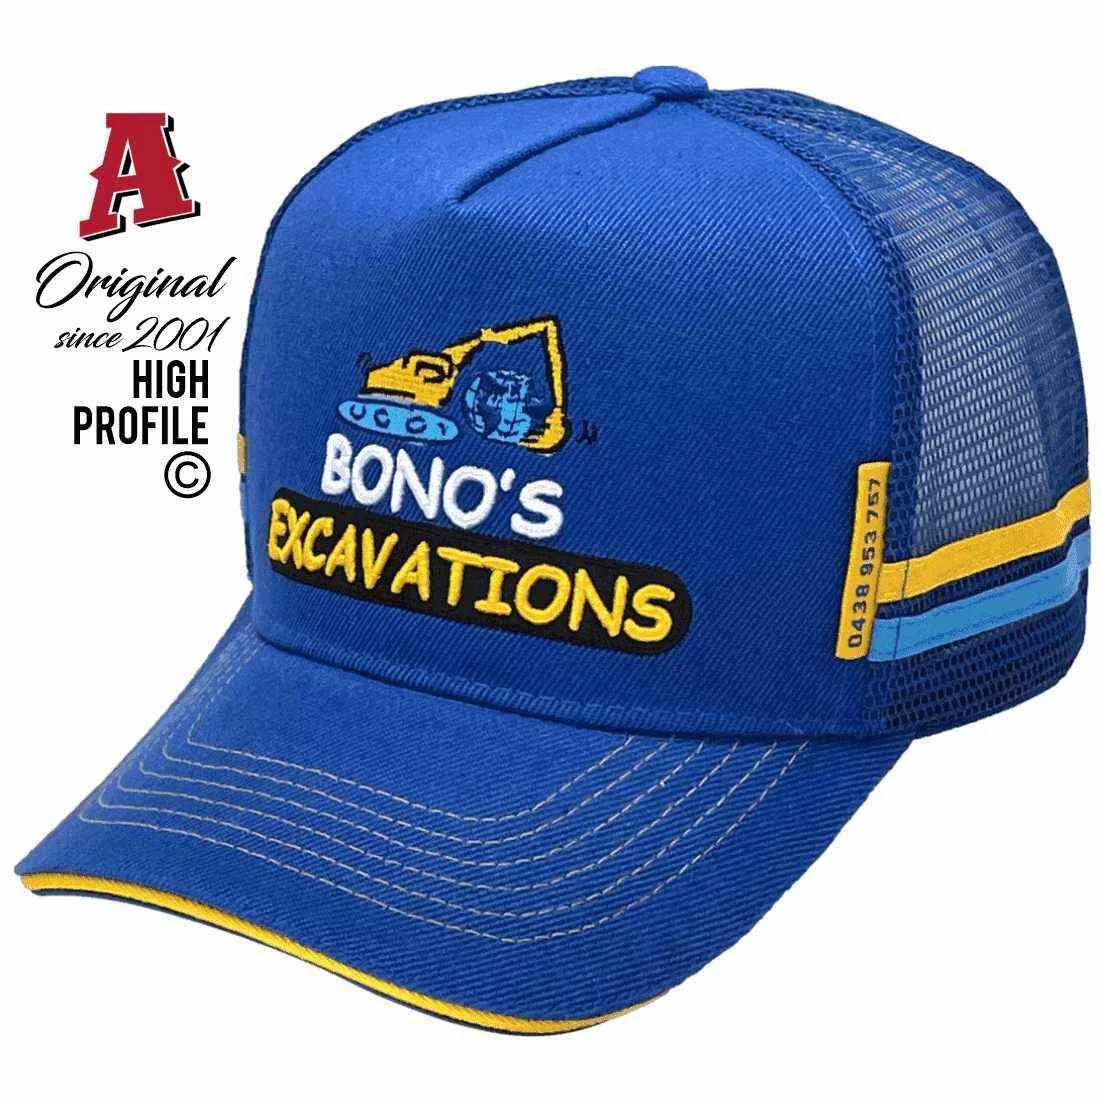 Bono's Excavations Kairi QLD Power Aussie Trucker Hats with Australian HeadFit Crown & Double SideBands Royal Gold Snapback